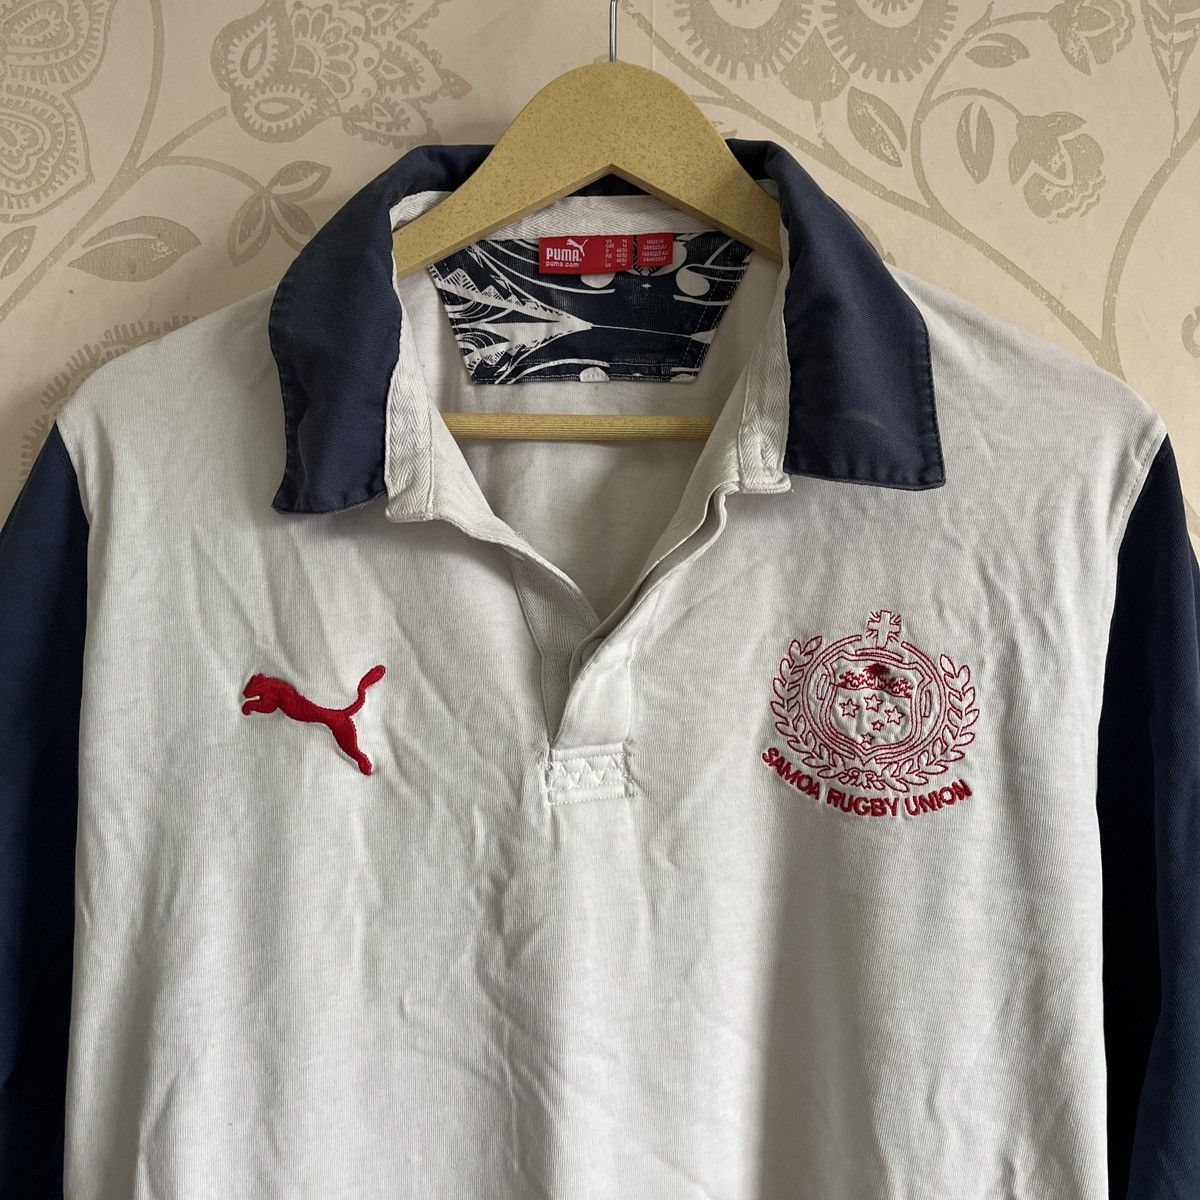 Vintage Samoa Rugby Union Jersey Puma - 18